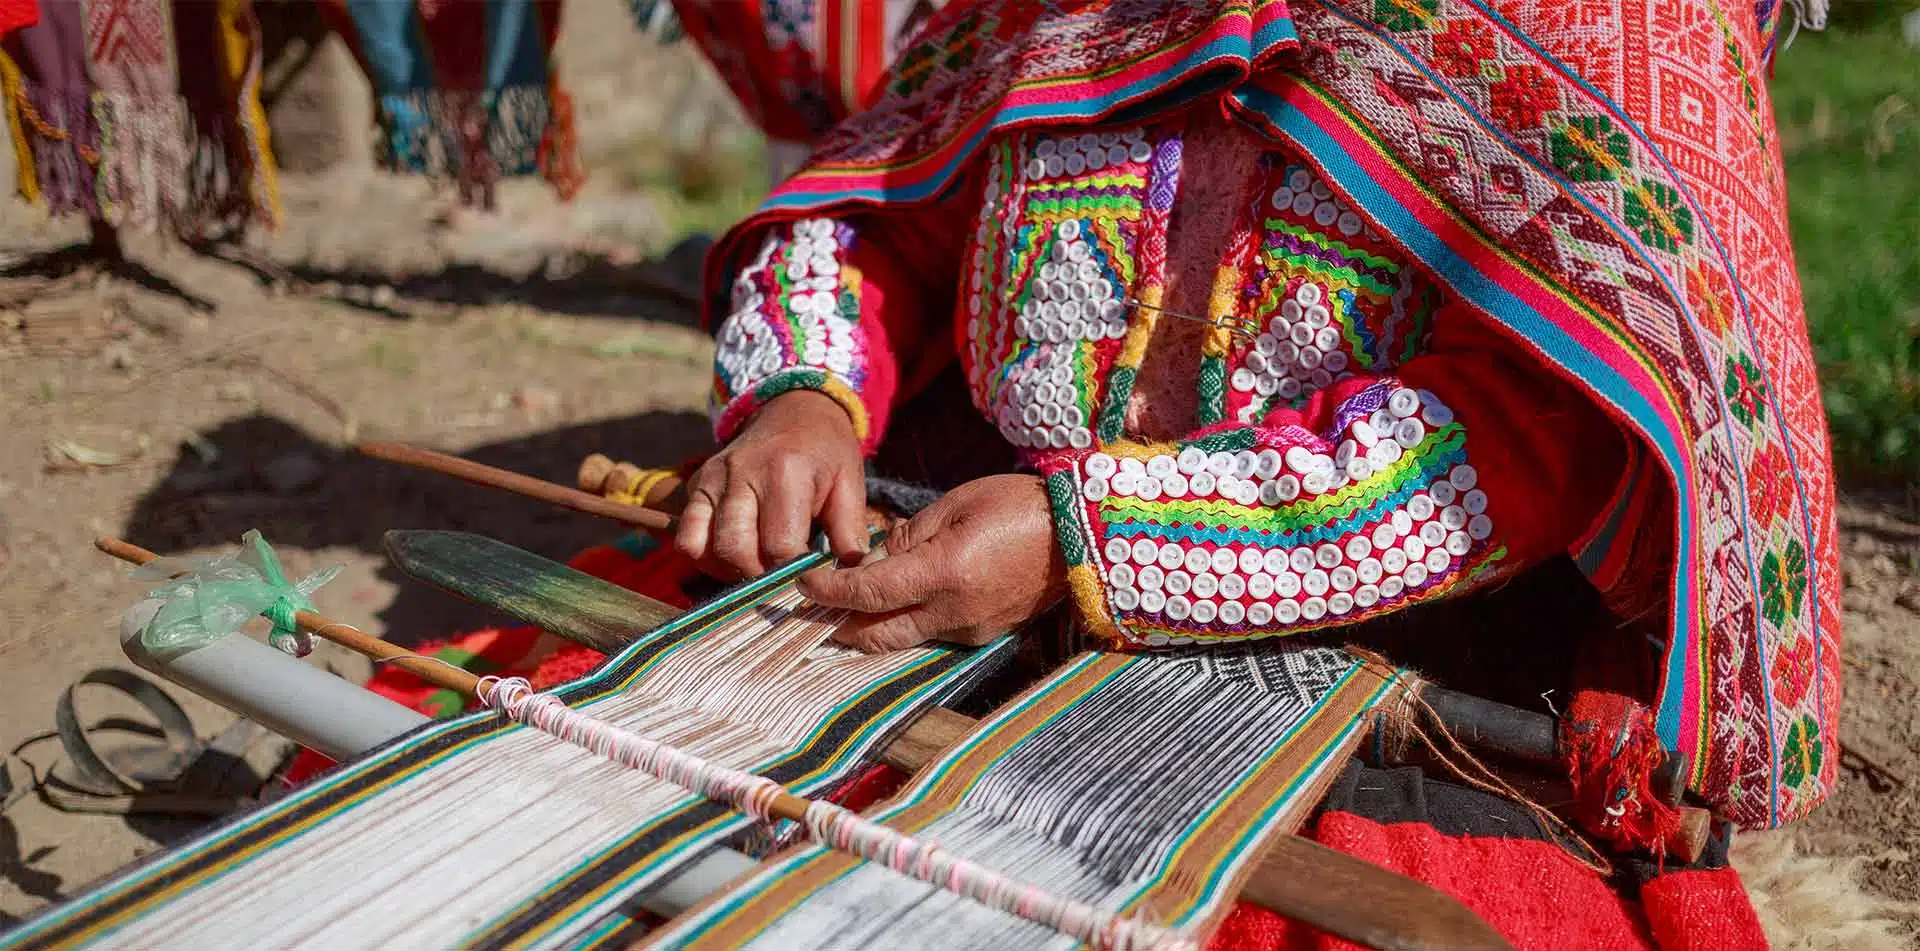 Woman weaving in Peru